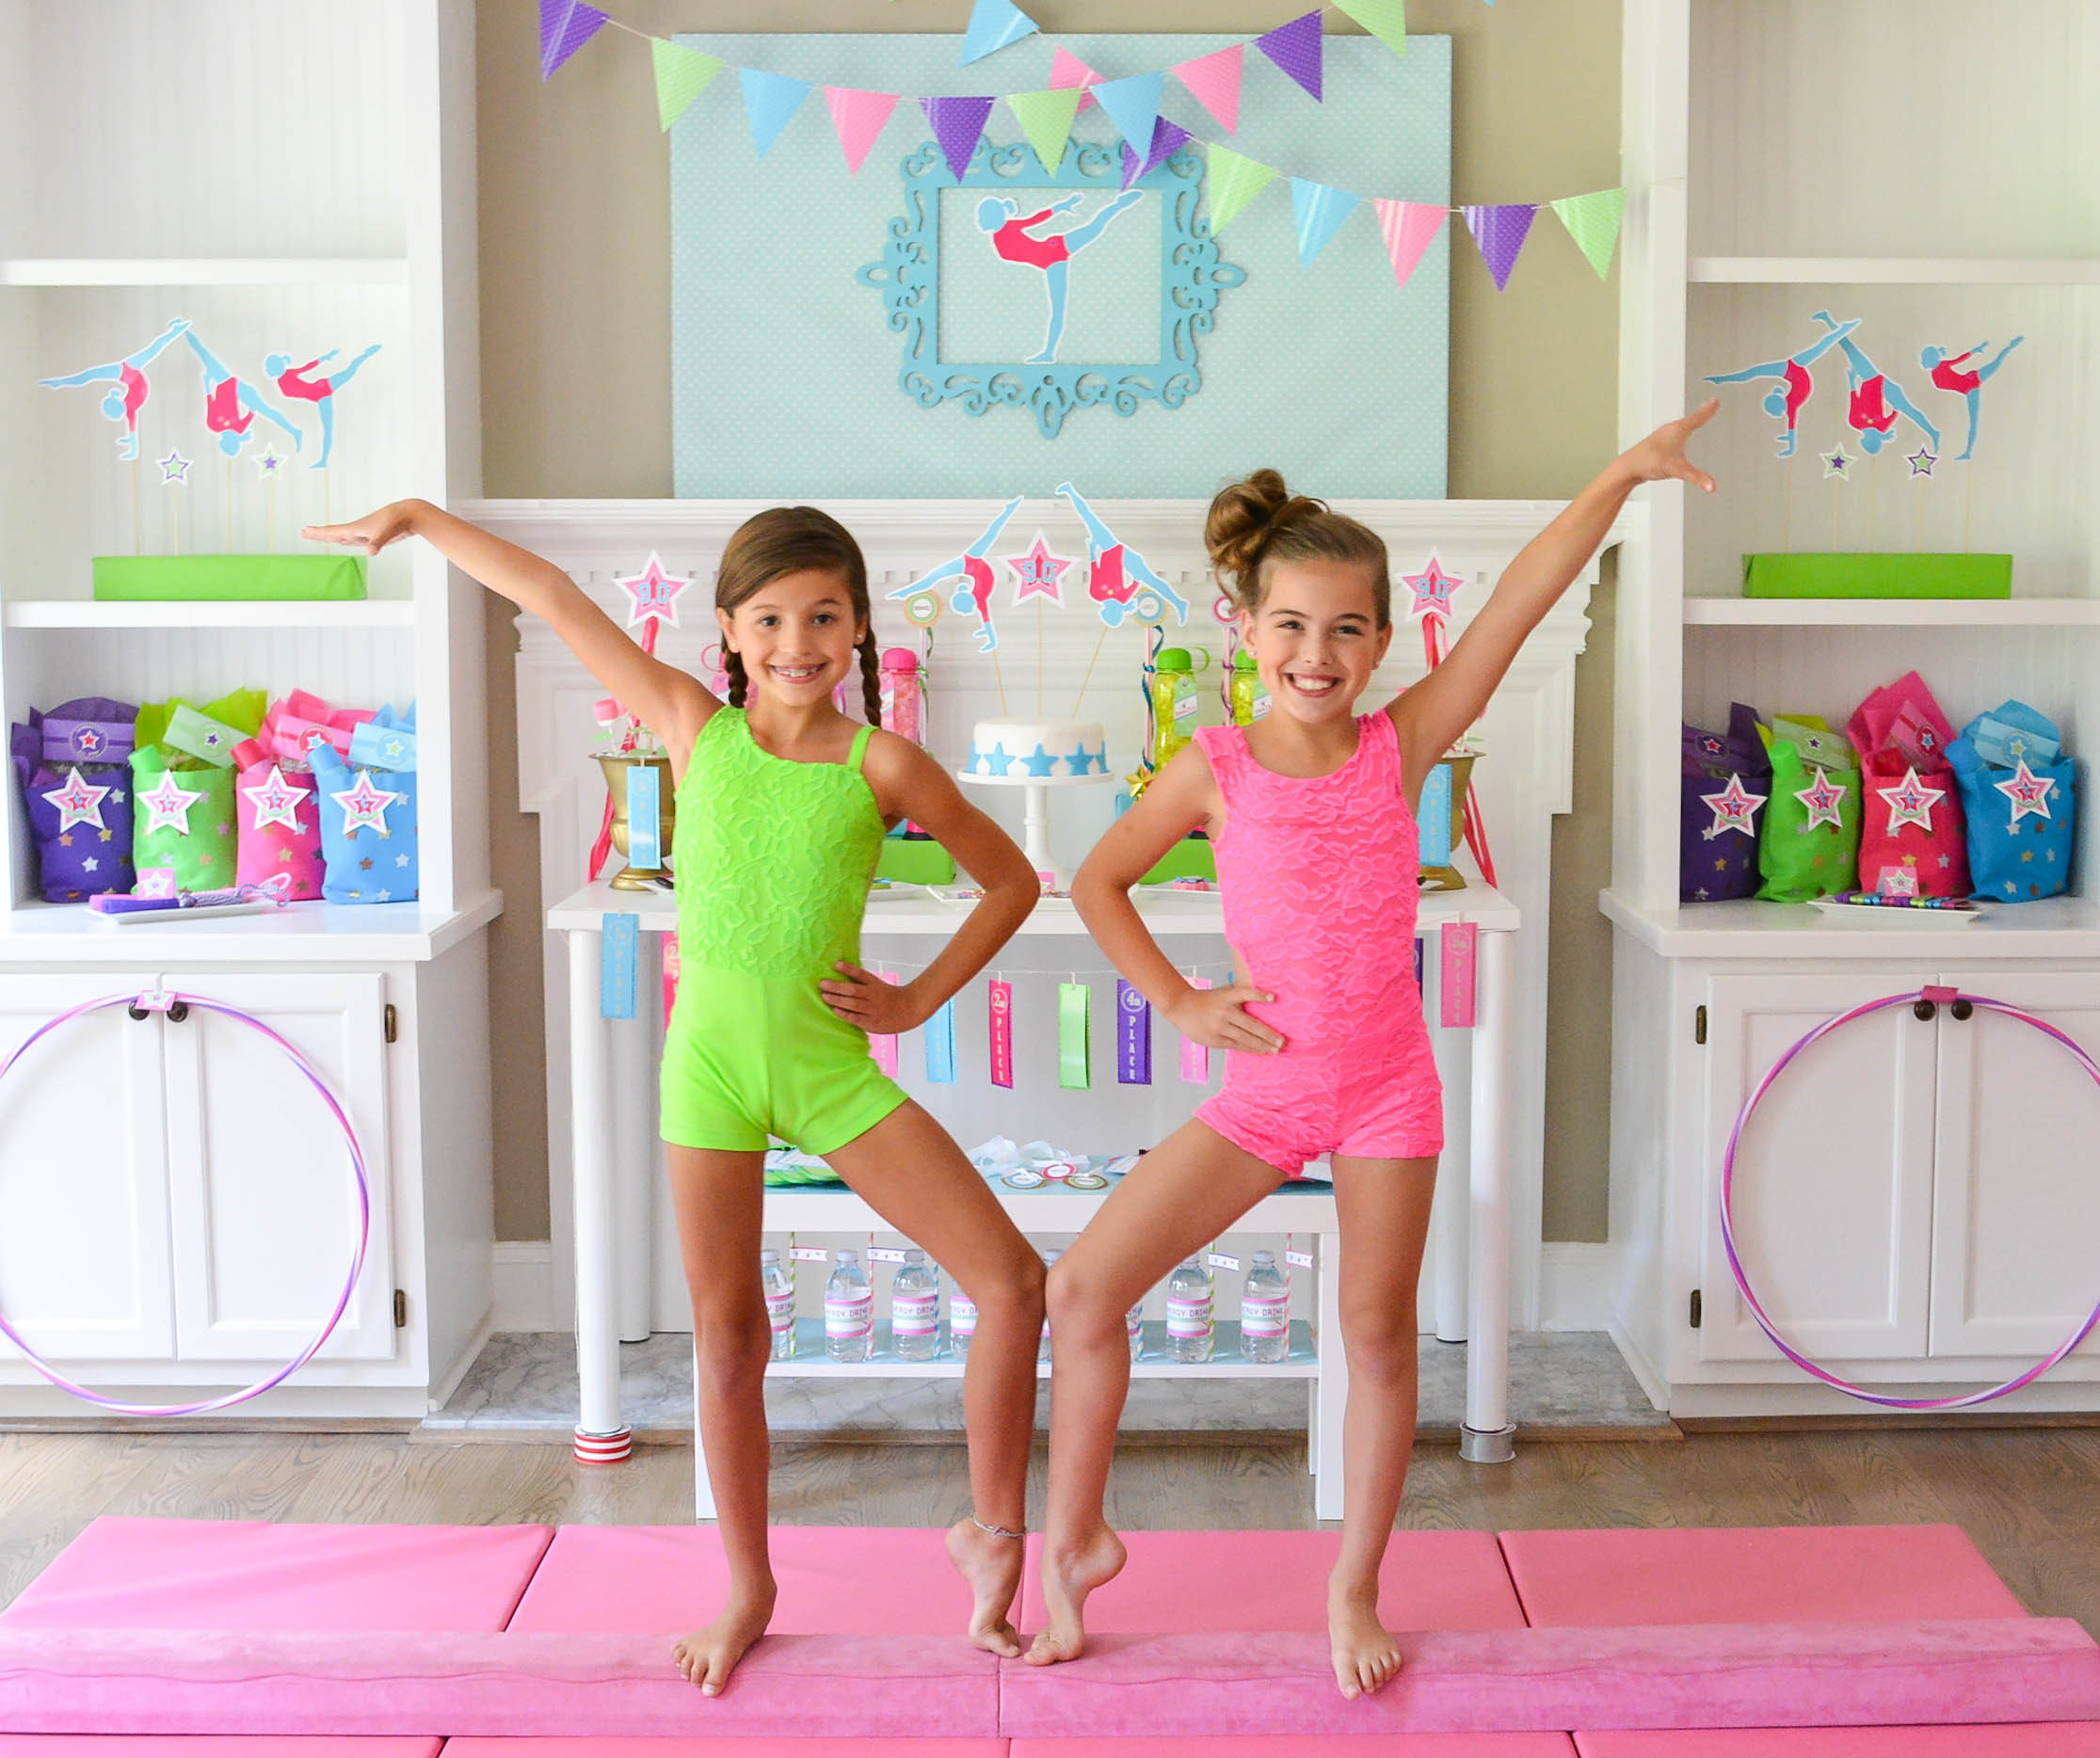 9Th Birthday Party Ideas For Girl
 Gymnastics birthday